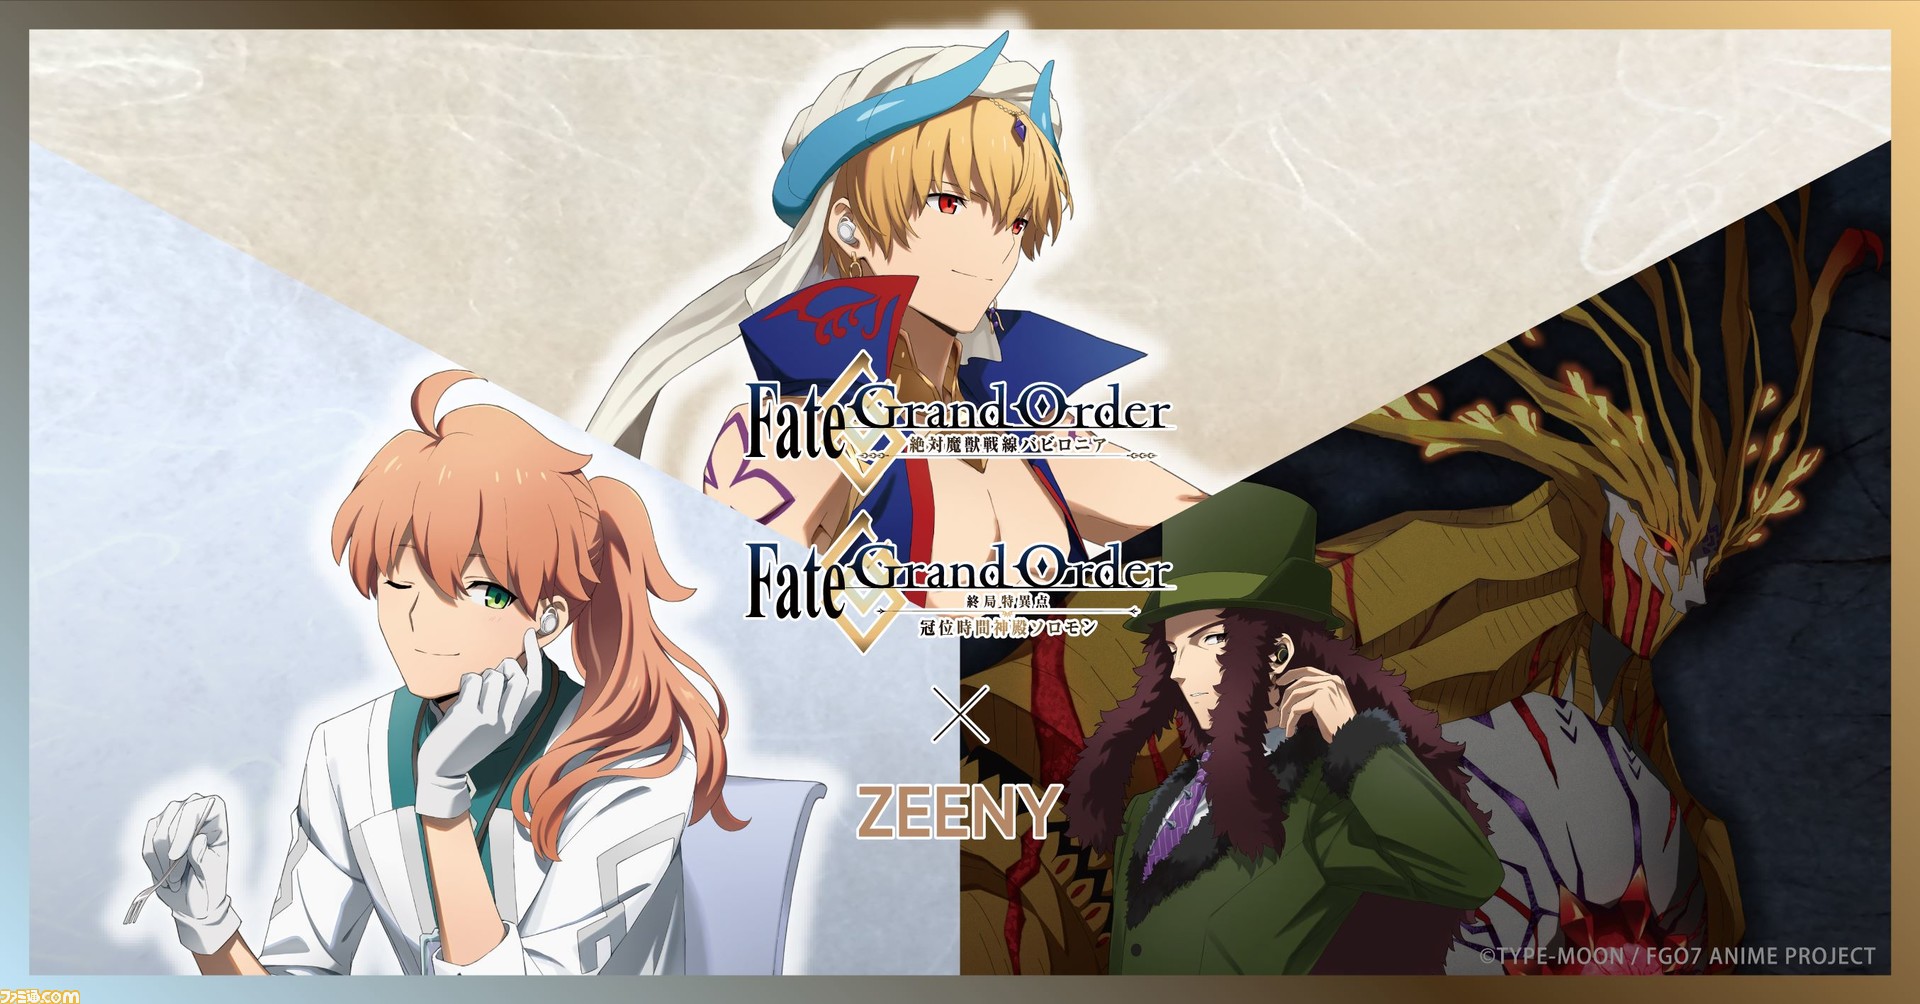 Fate/Grand Order』×Zeenyコラボイヤフォンが予約開始。ギルガメッシュ